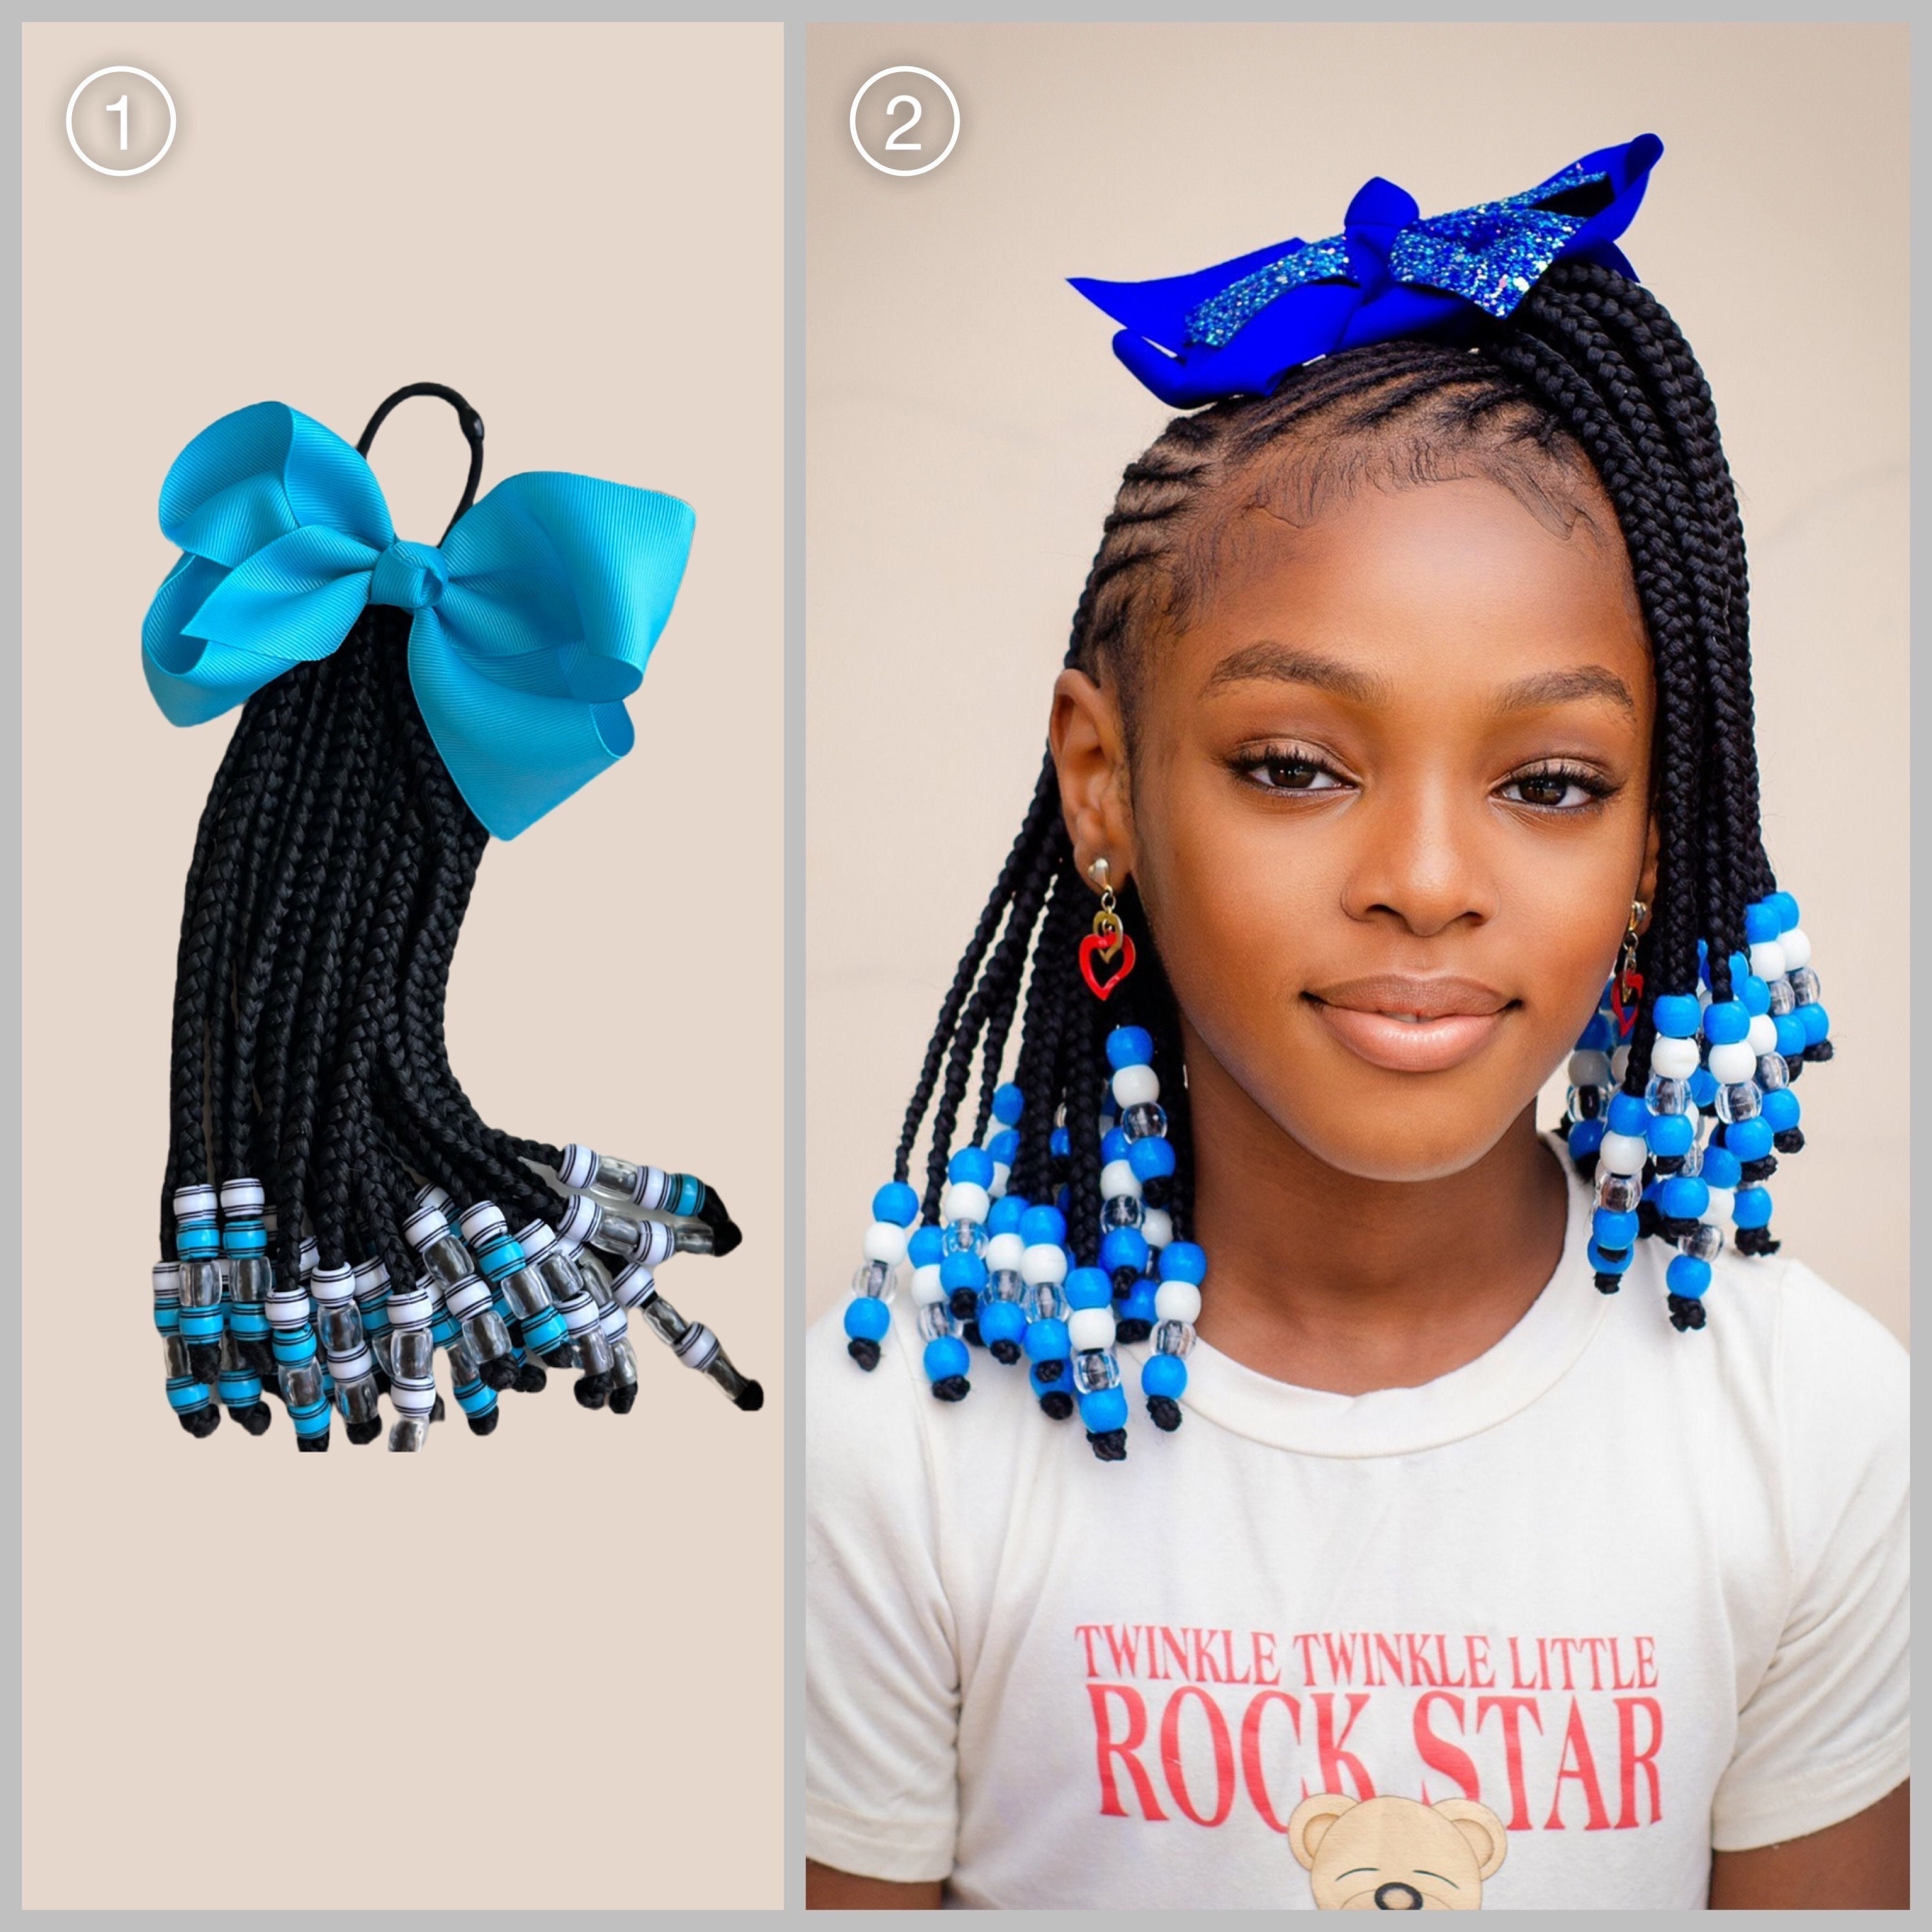 455 Pcs Locs Hair Jewelry Clear Beads Dreadlocks Accessories for Women  Cornrow Braids Dreadlock Metal Clips Shell Pendant Charms Hair Decoration